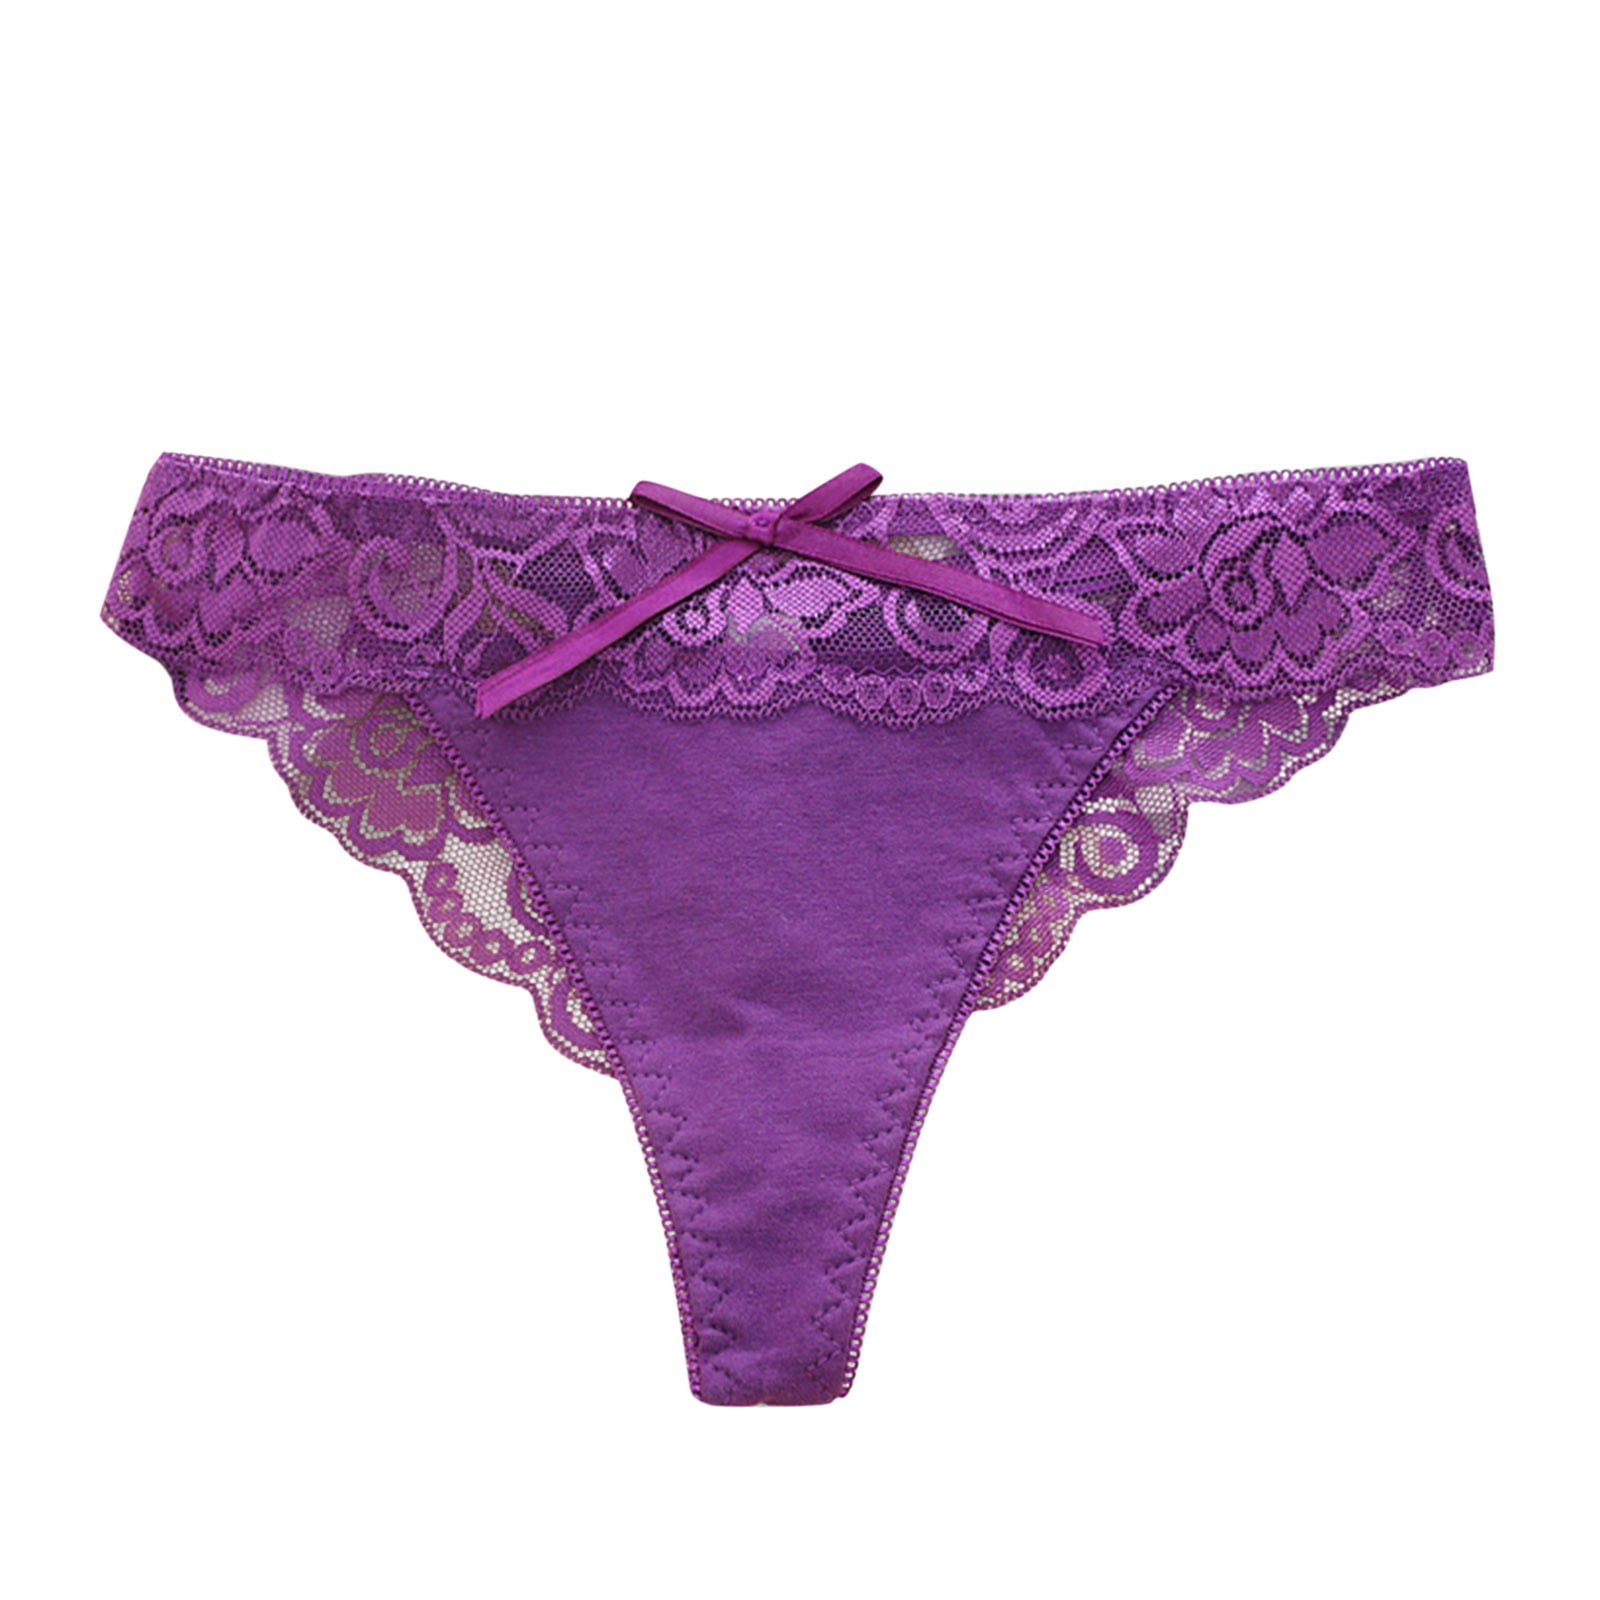  ANNYISON Women Panties 2-5 Pack, Soft Cotton Tummy